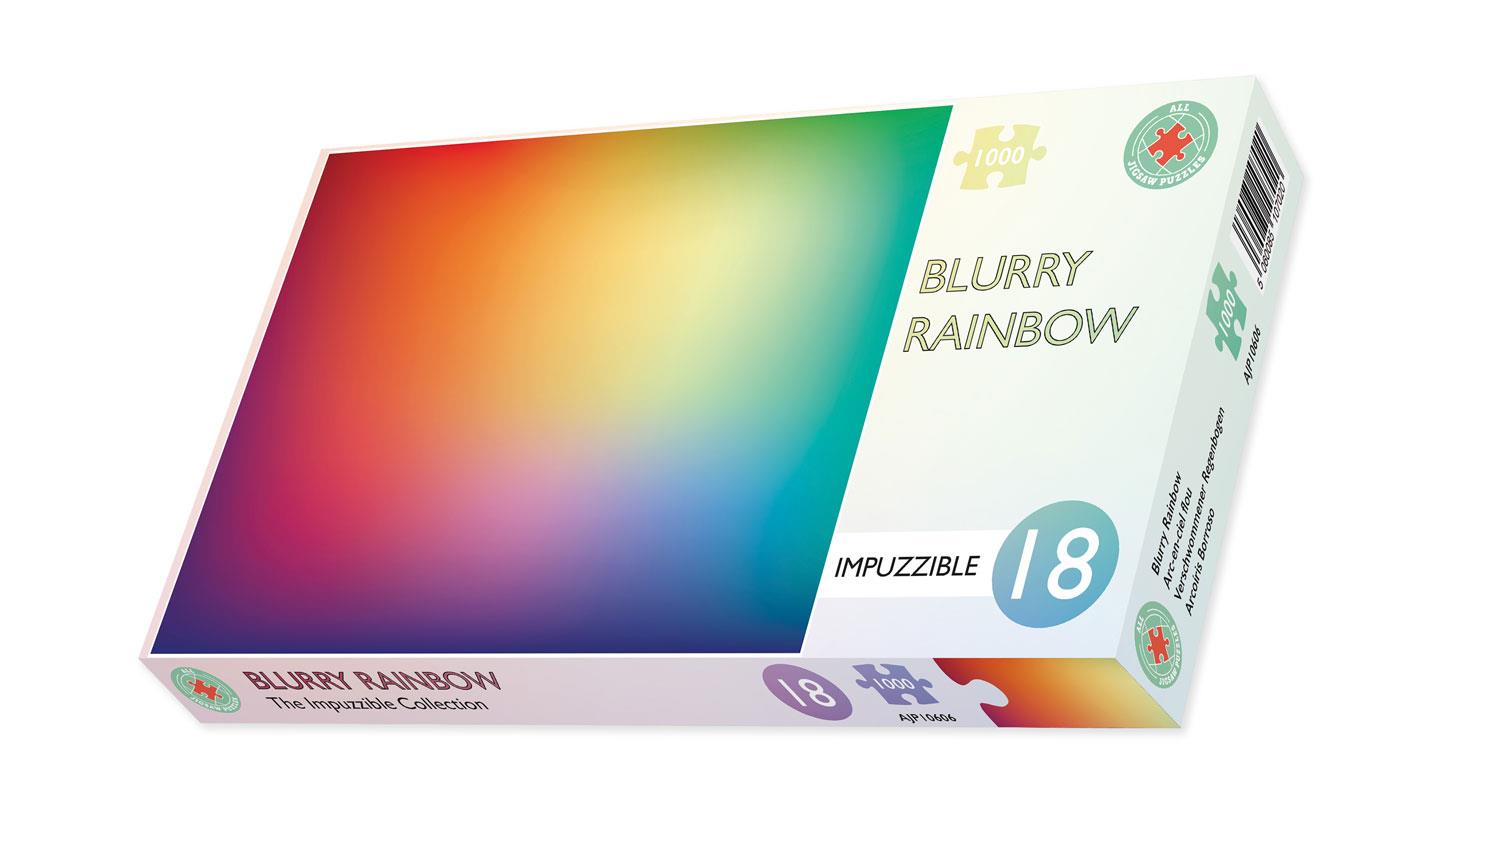 Blurry Rainbow  - Impuzzible No.18 - Jigsaw Puzzle (1000 Pieces)